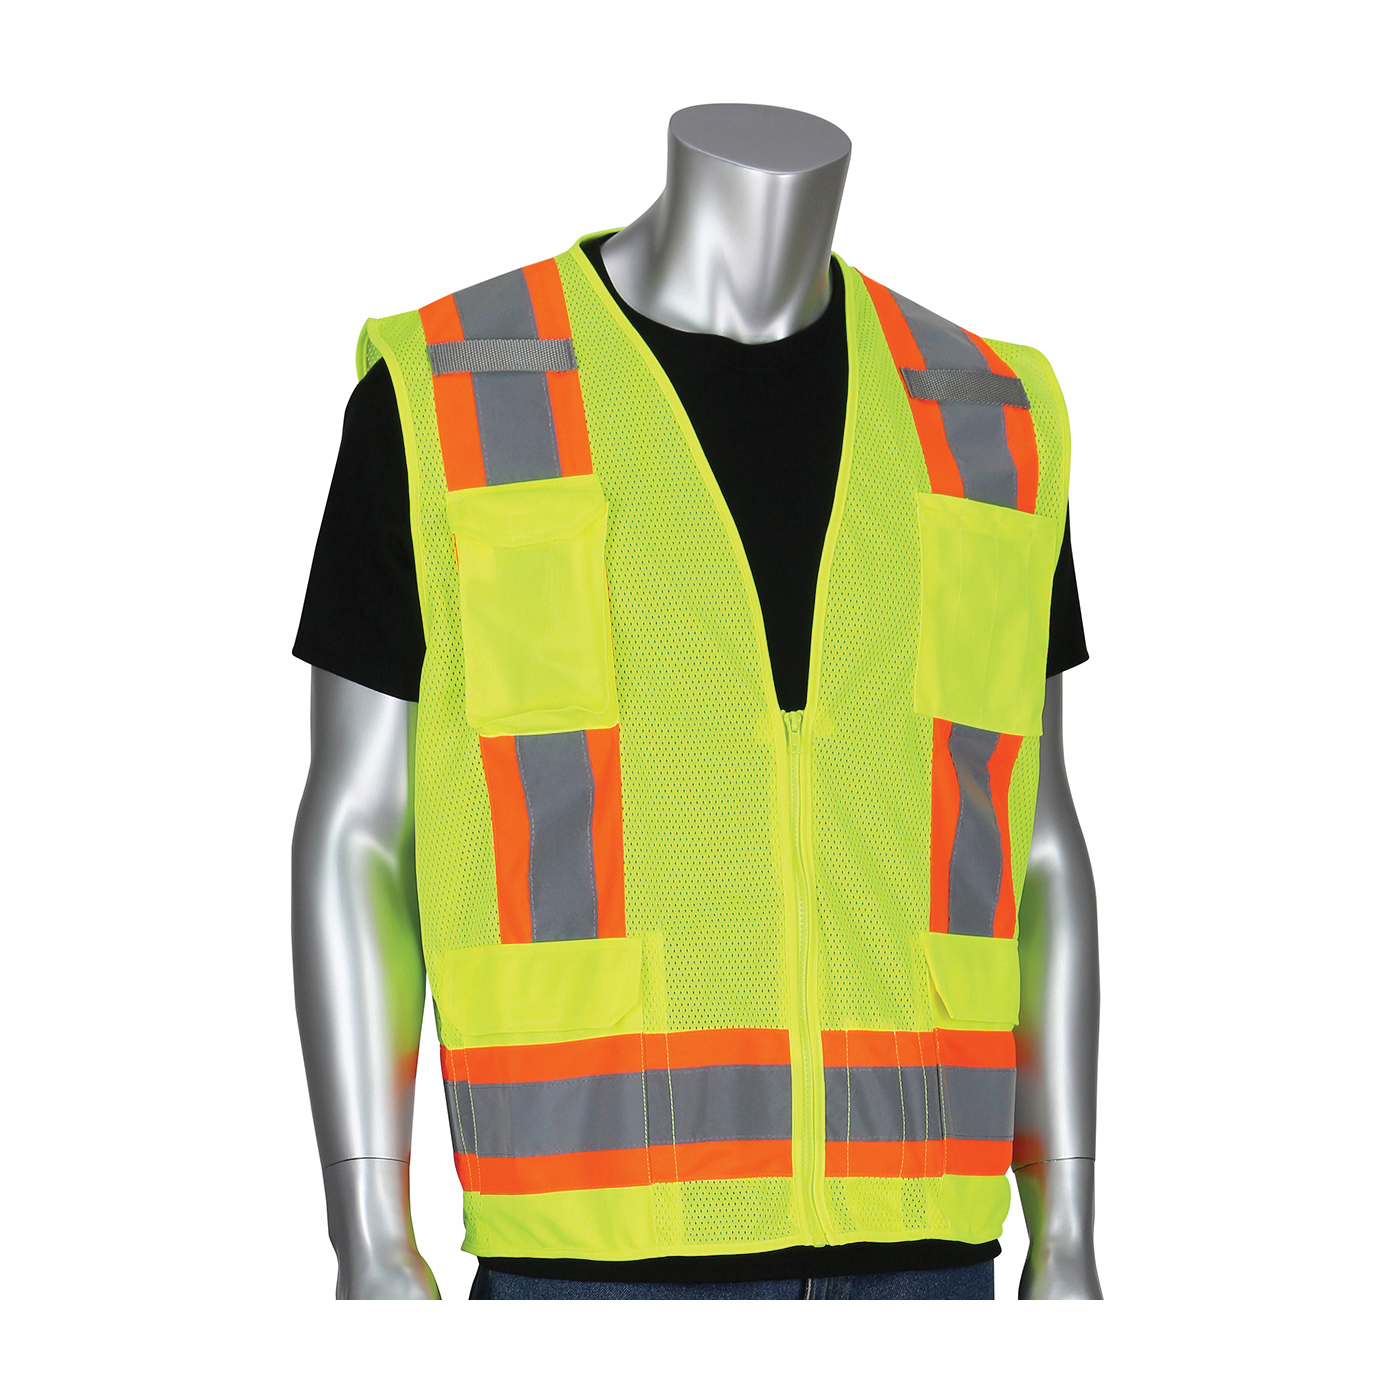 PIP® 302-0500M-LY/4X 2-Tone Surveyor Safety Vest, 4XL, Hi-Viz Lime Yellow, Polyester, Zipper Closure, 11 Pockets, ANSI Class: Class 2, Specifications Met: ANSI 107 Type R